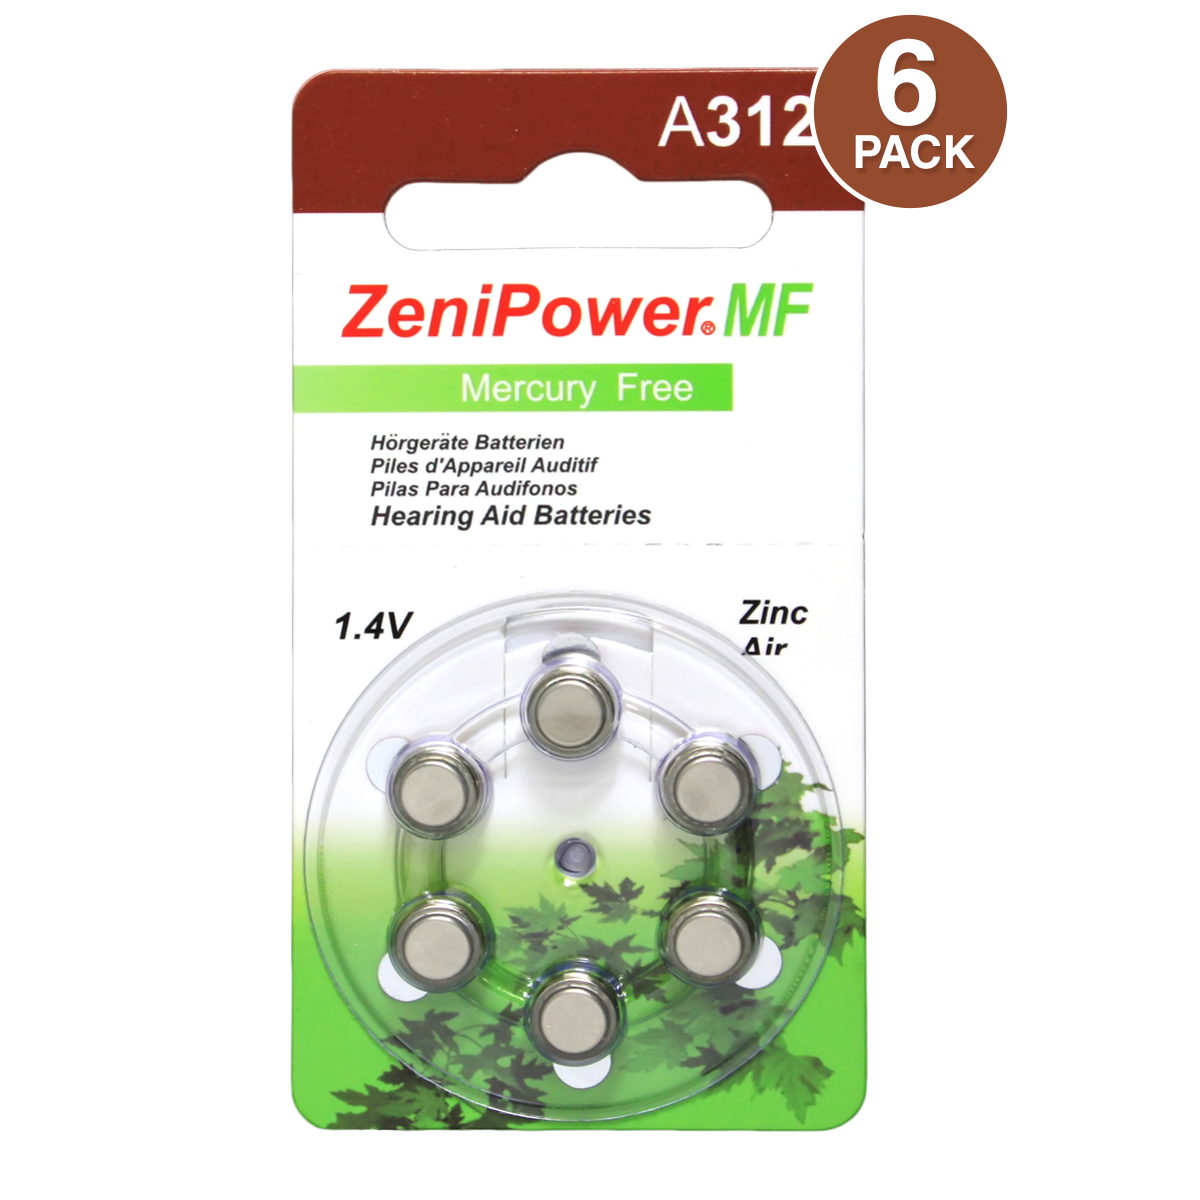 ZeniPower A312 Hearing Aid Battery 6 pcs - MERCURY FREE